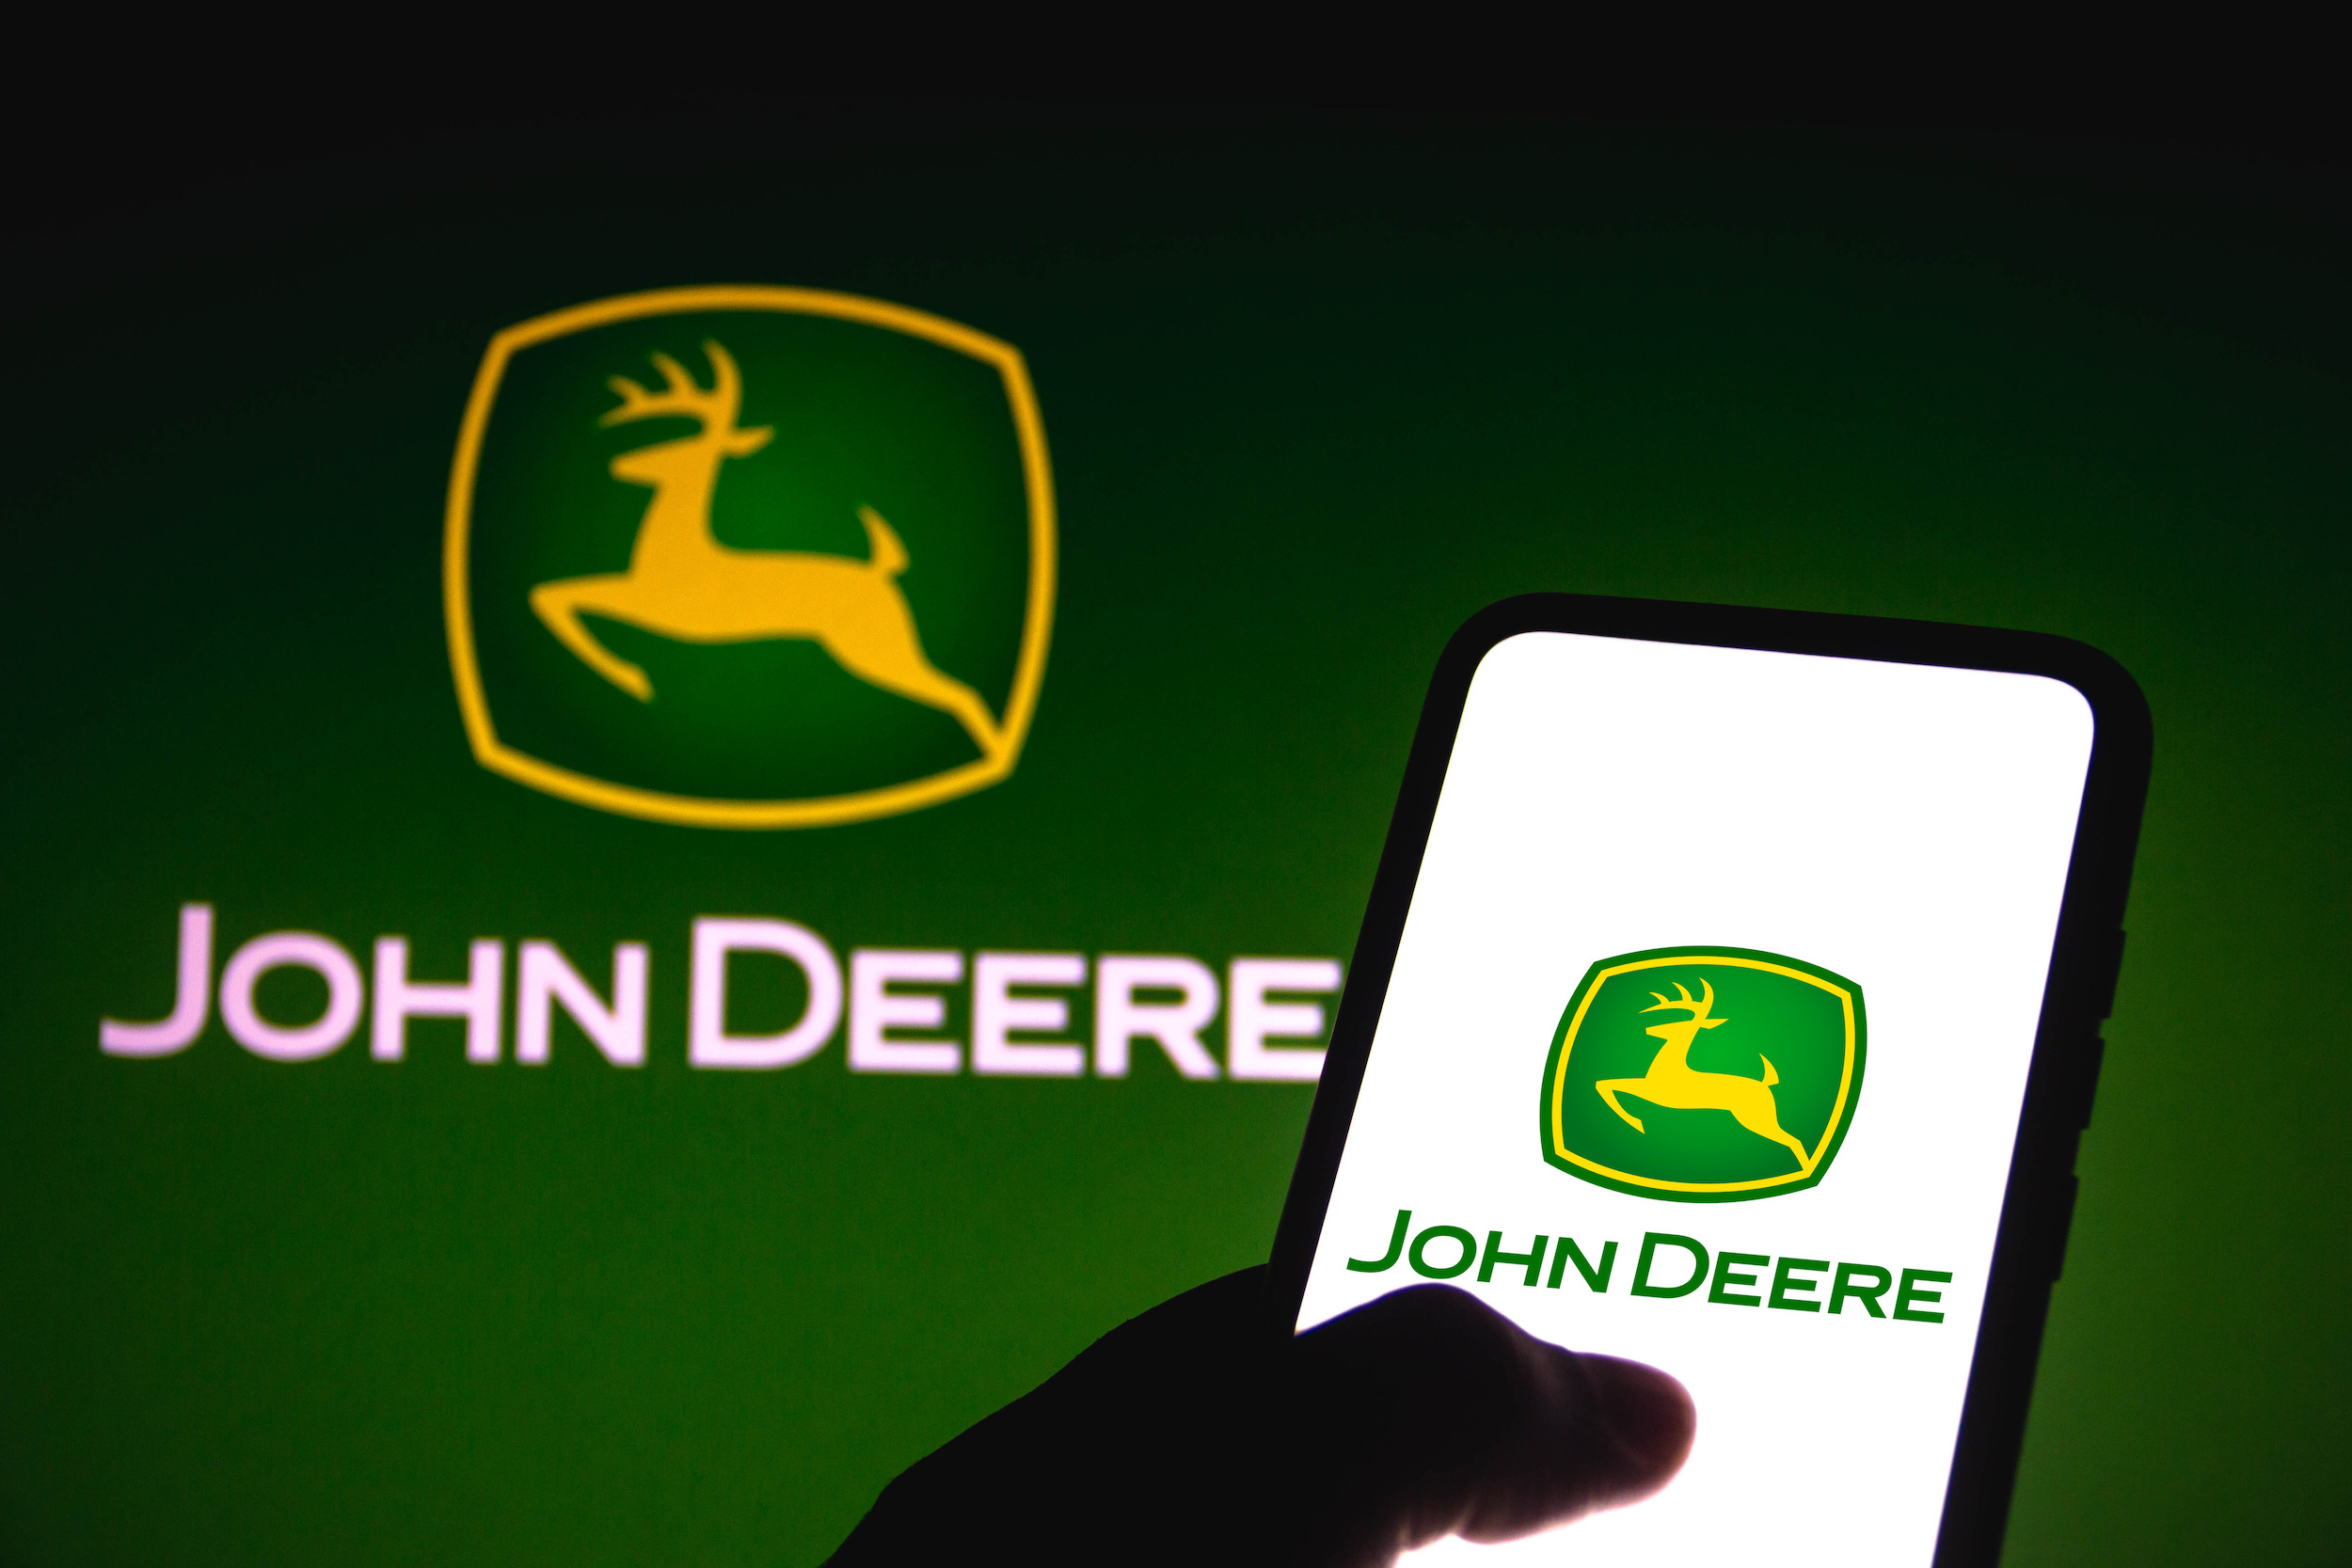 John Deere logo on a smart phone